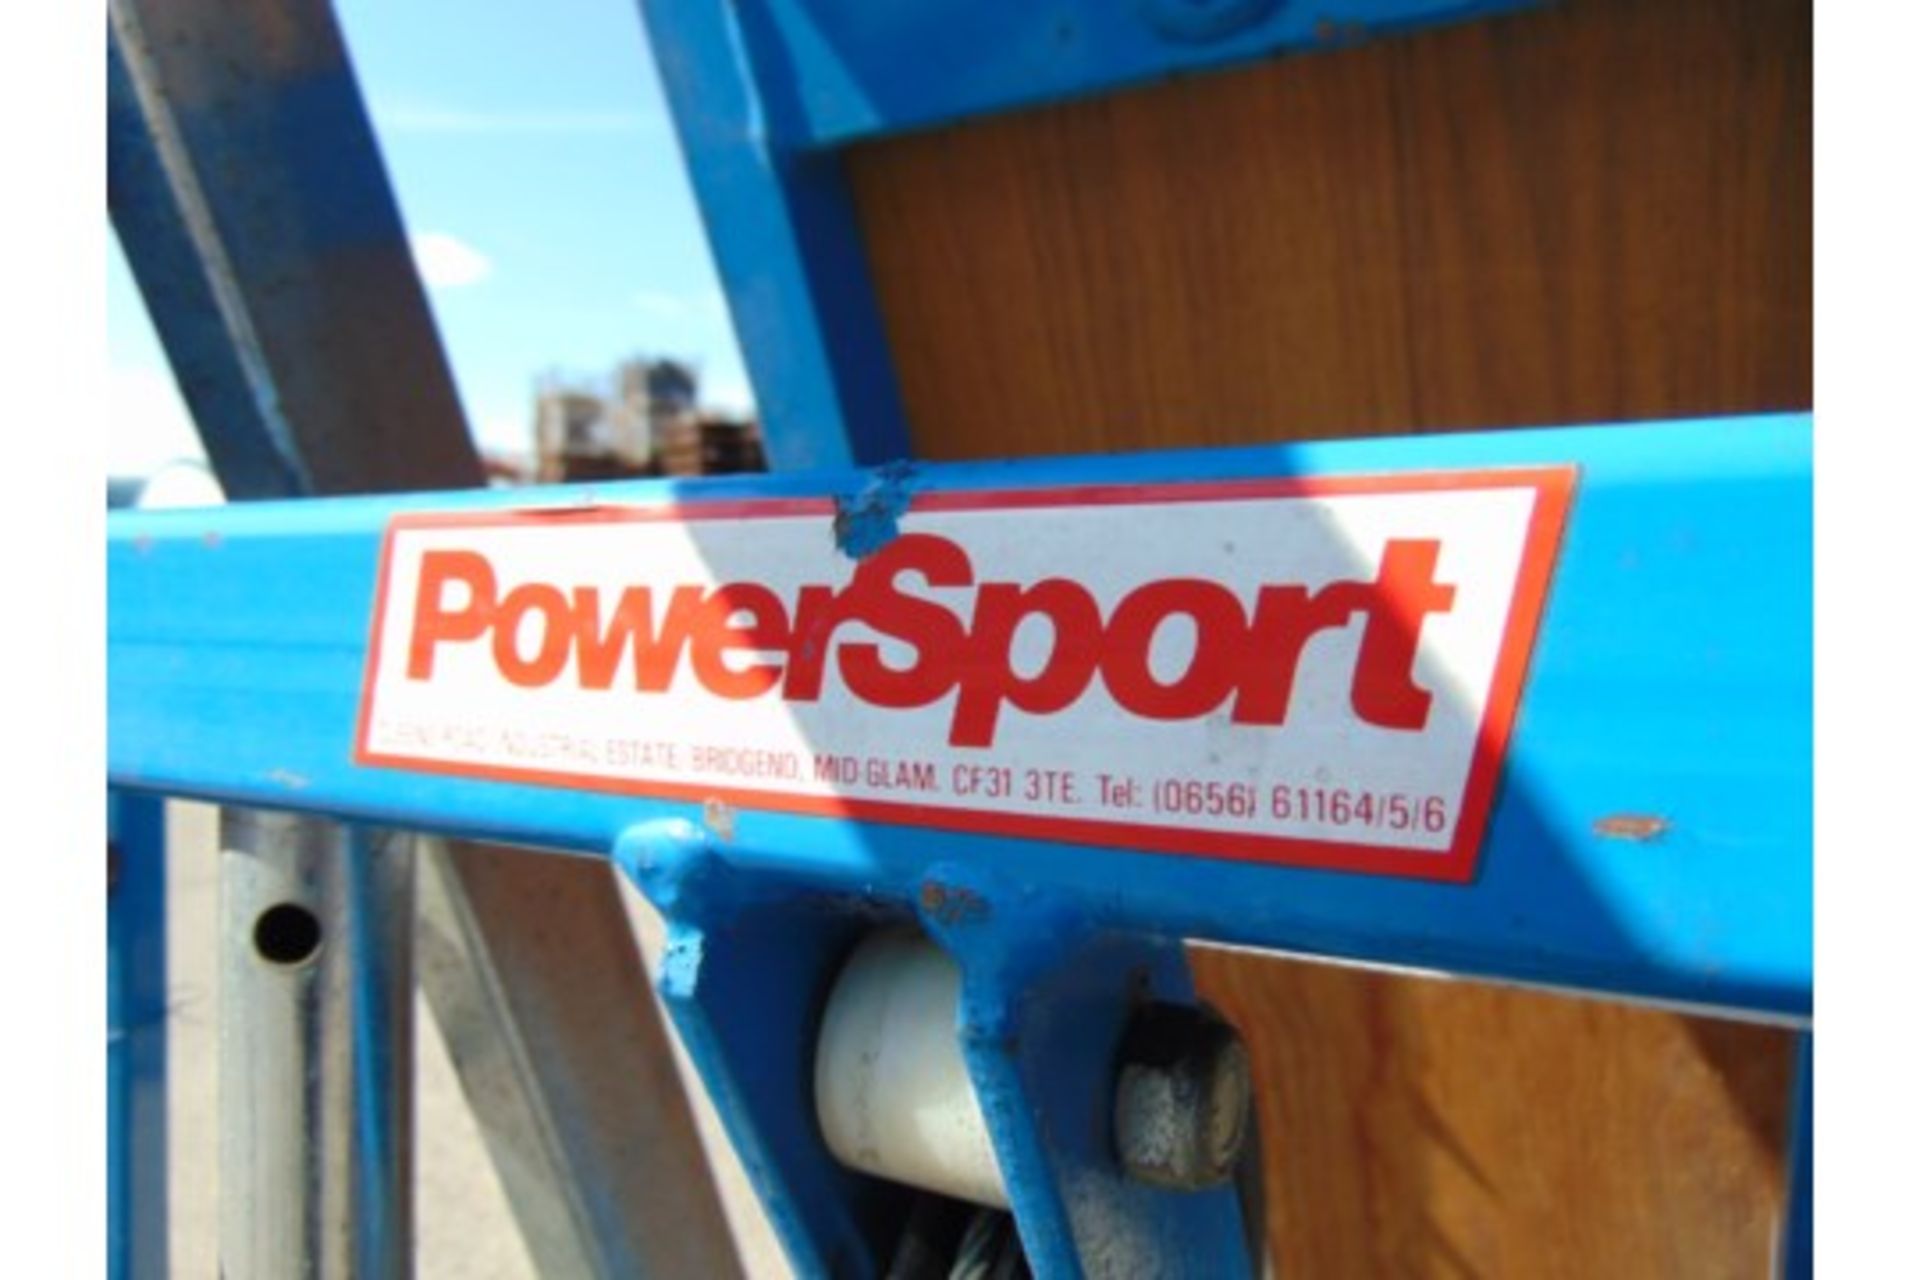 Powersport Multigym - Image 12 of 12